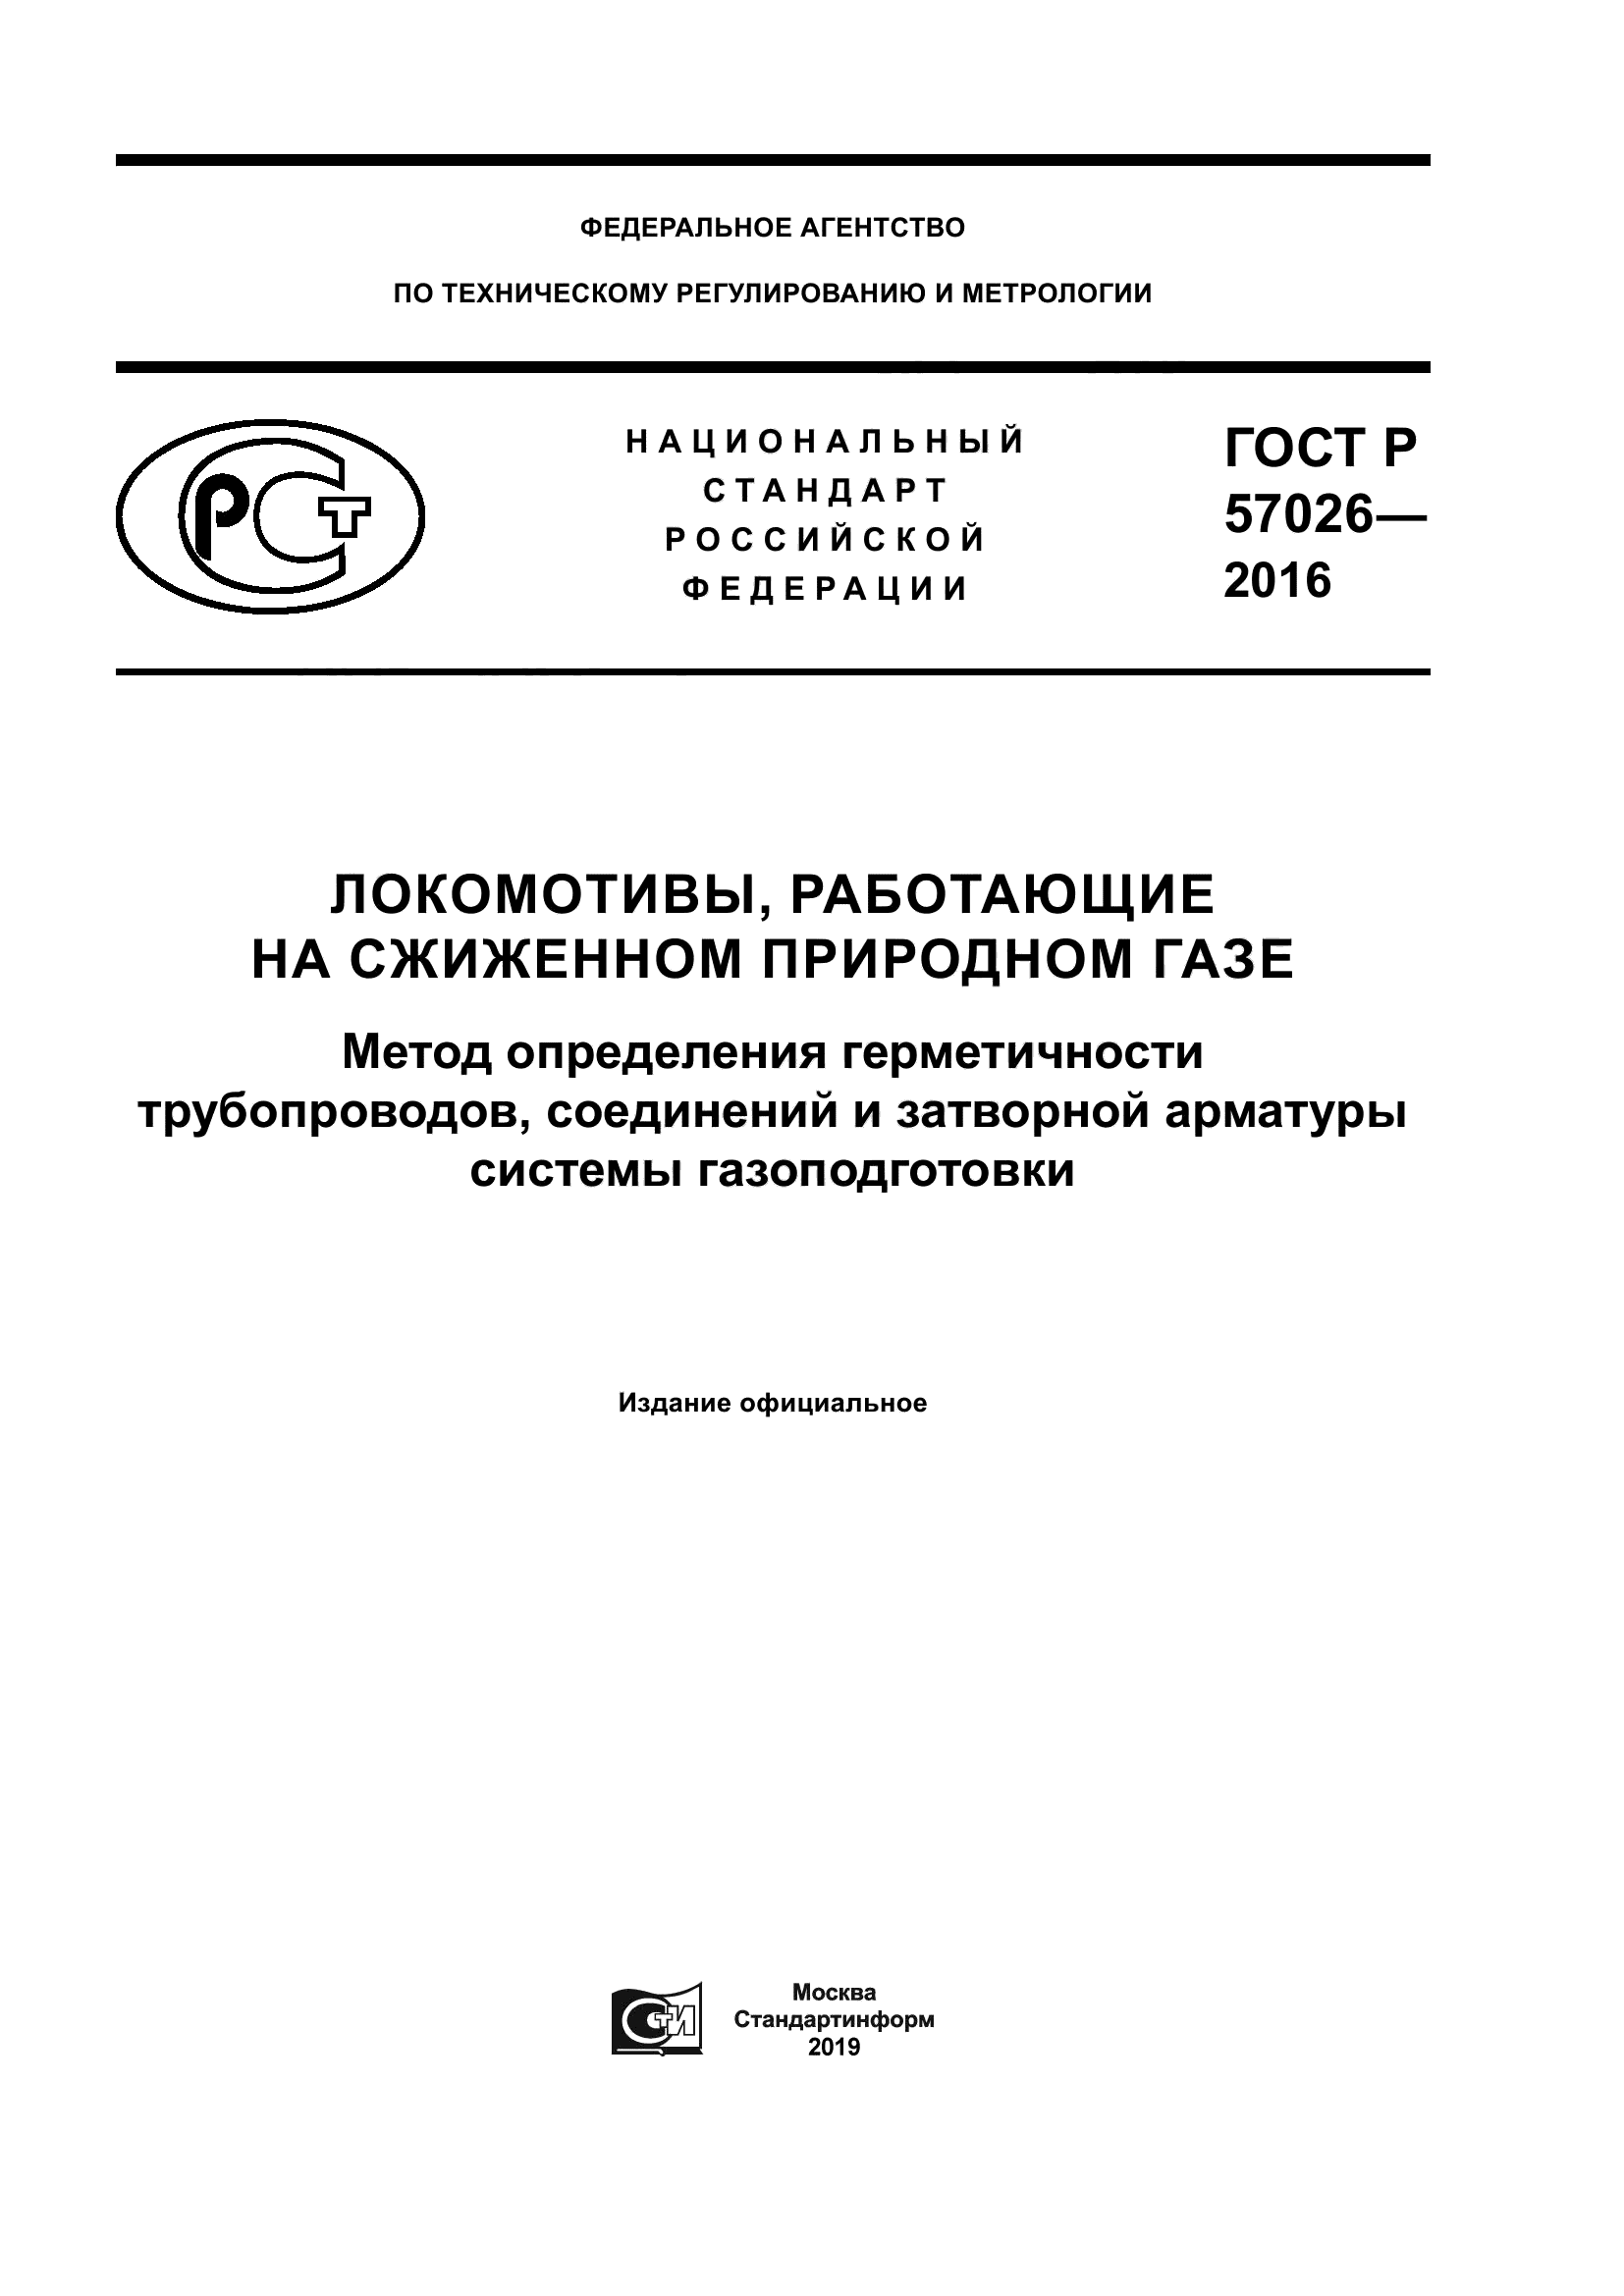 ГОСТ Р 57026-2016